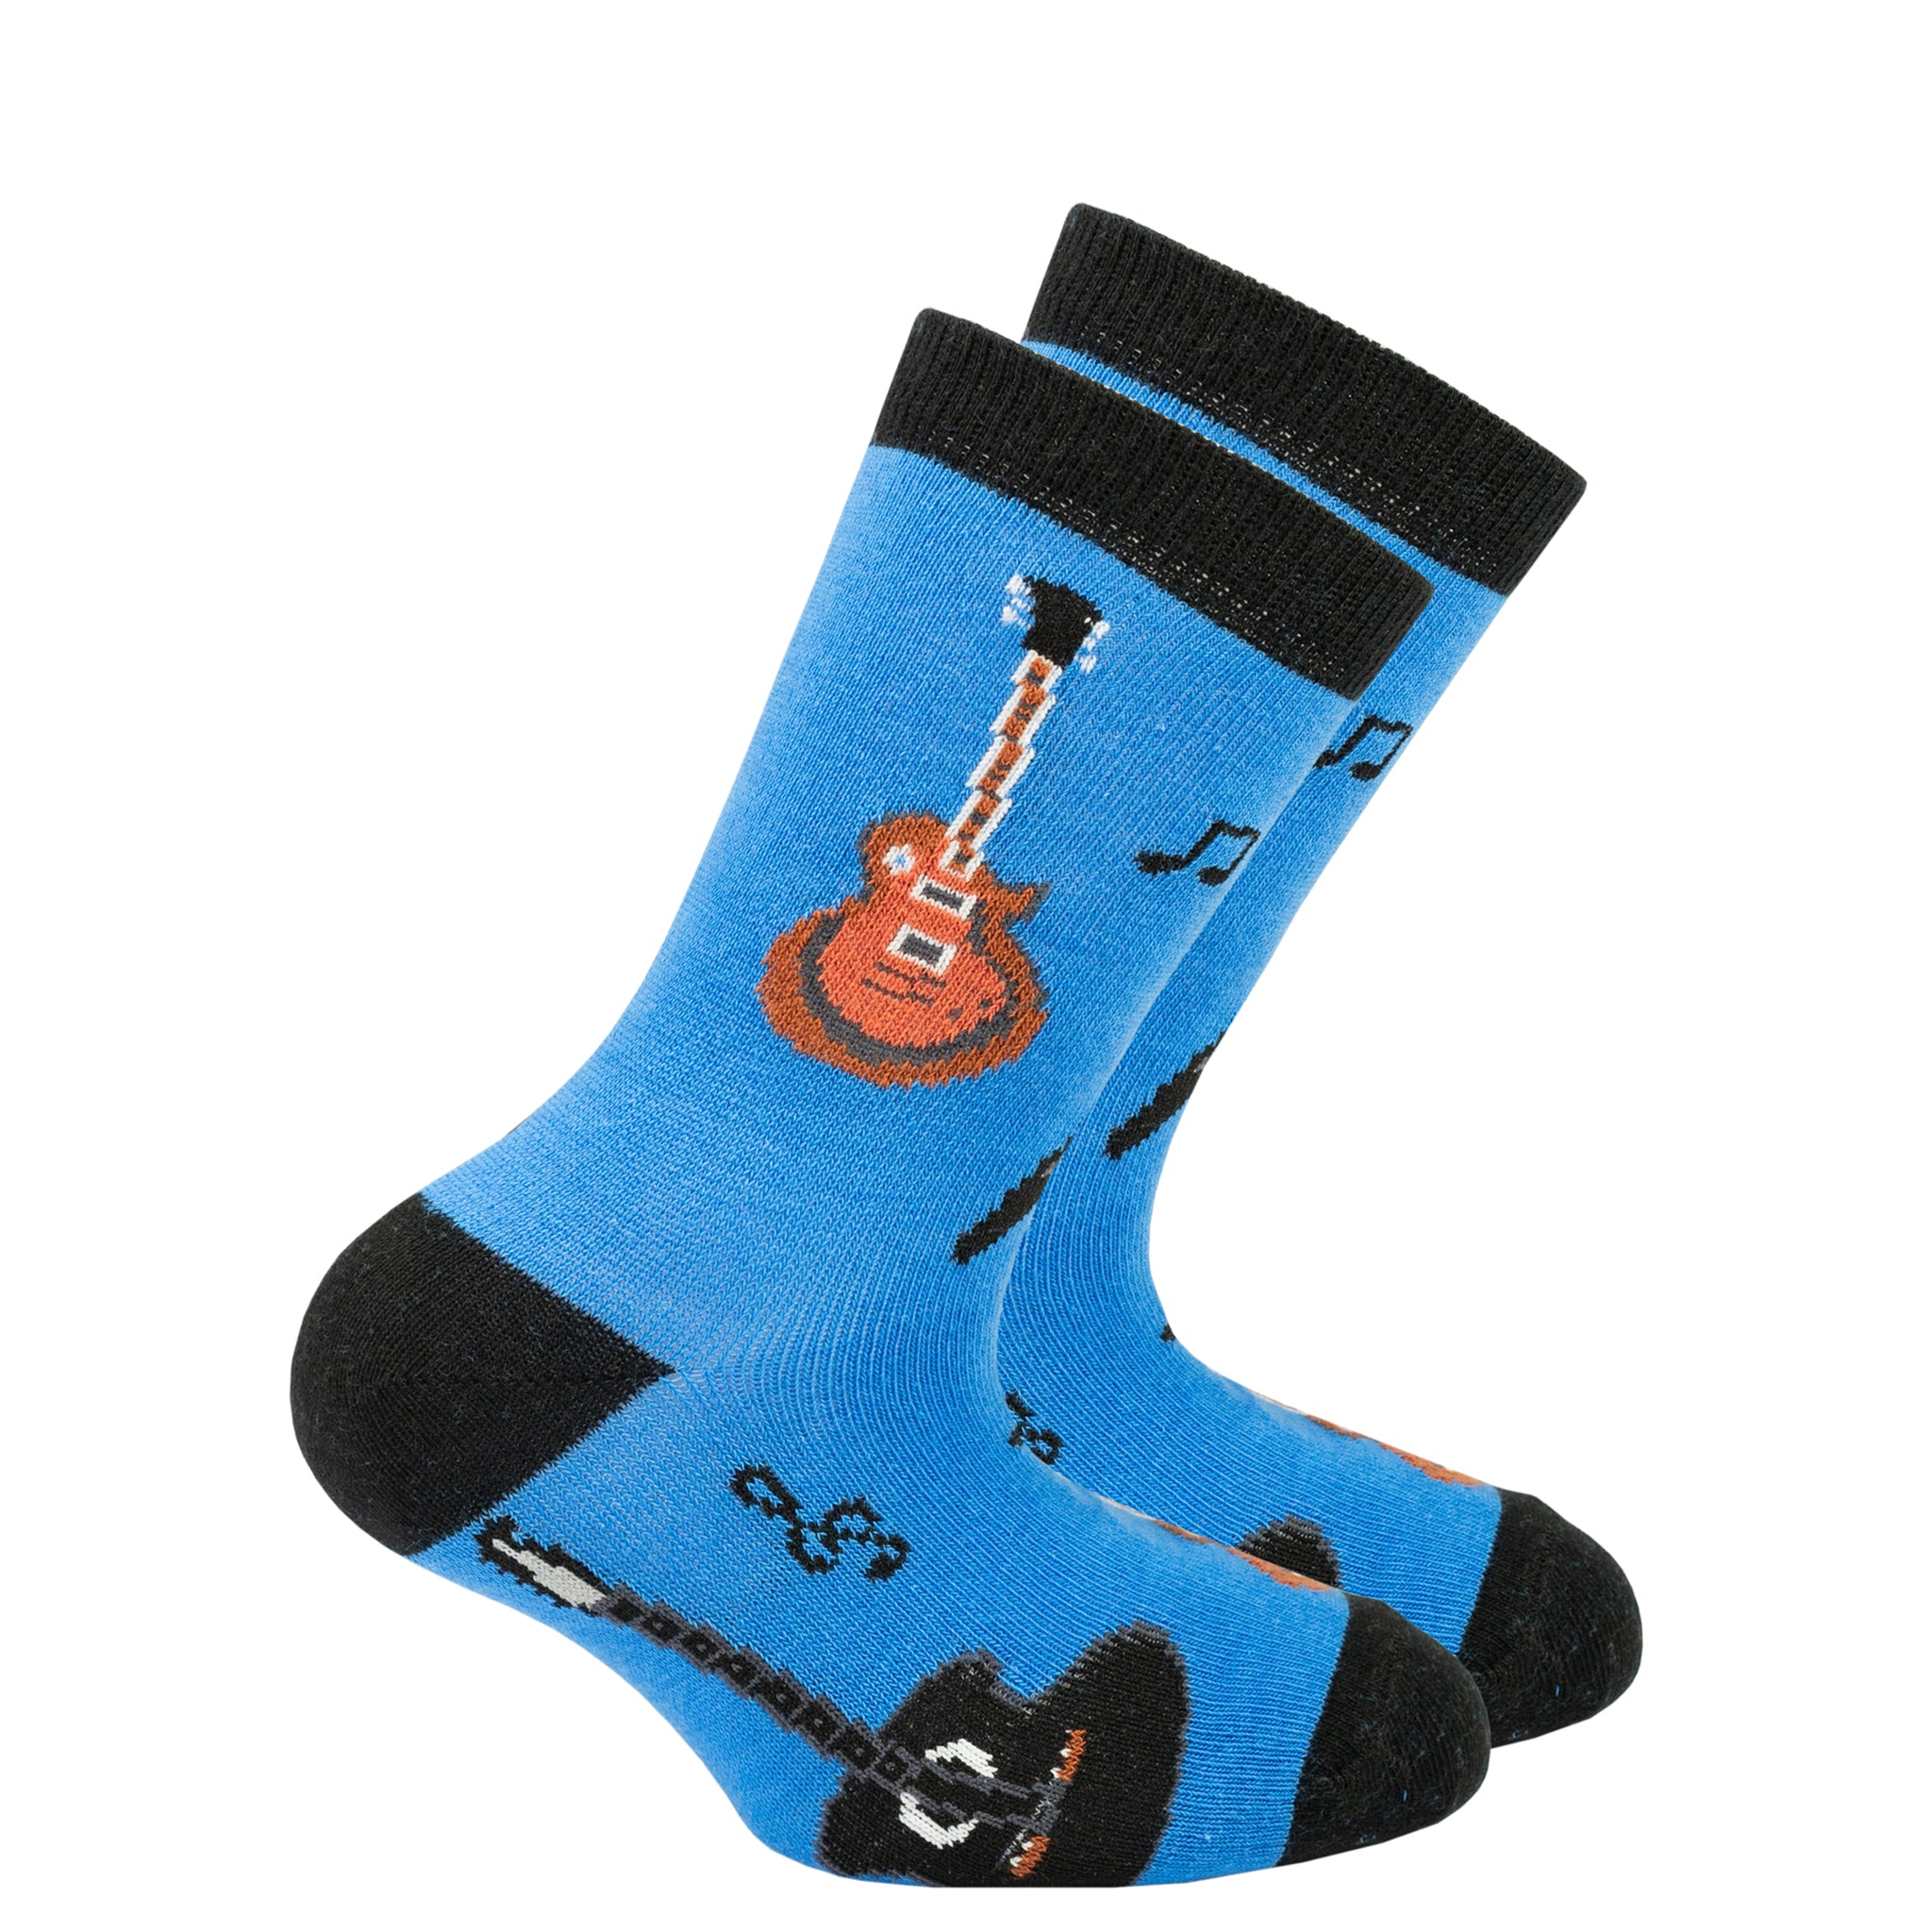 Kids Guitars Socks blue and black